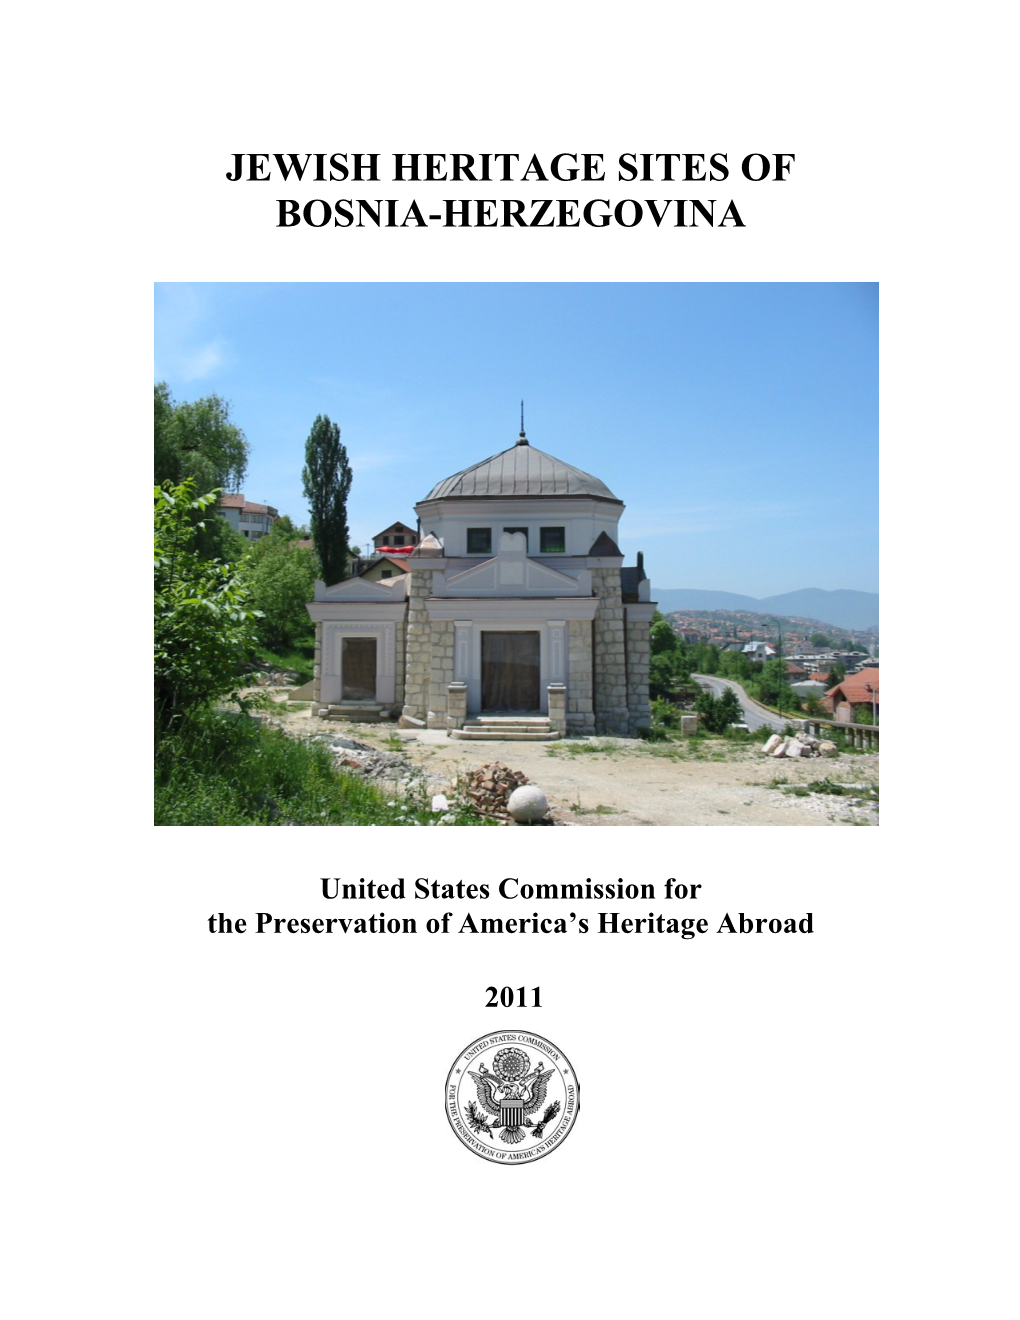 Jewish Heritage Sites of Bosnia-Herzegovina, 2011